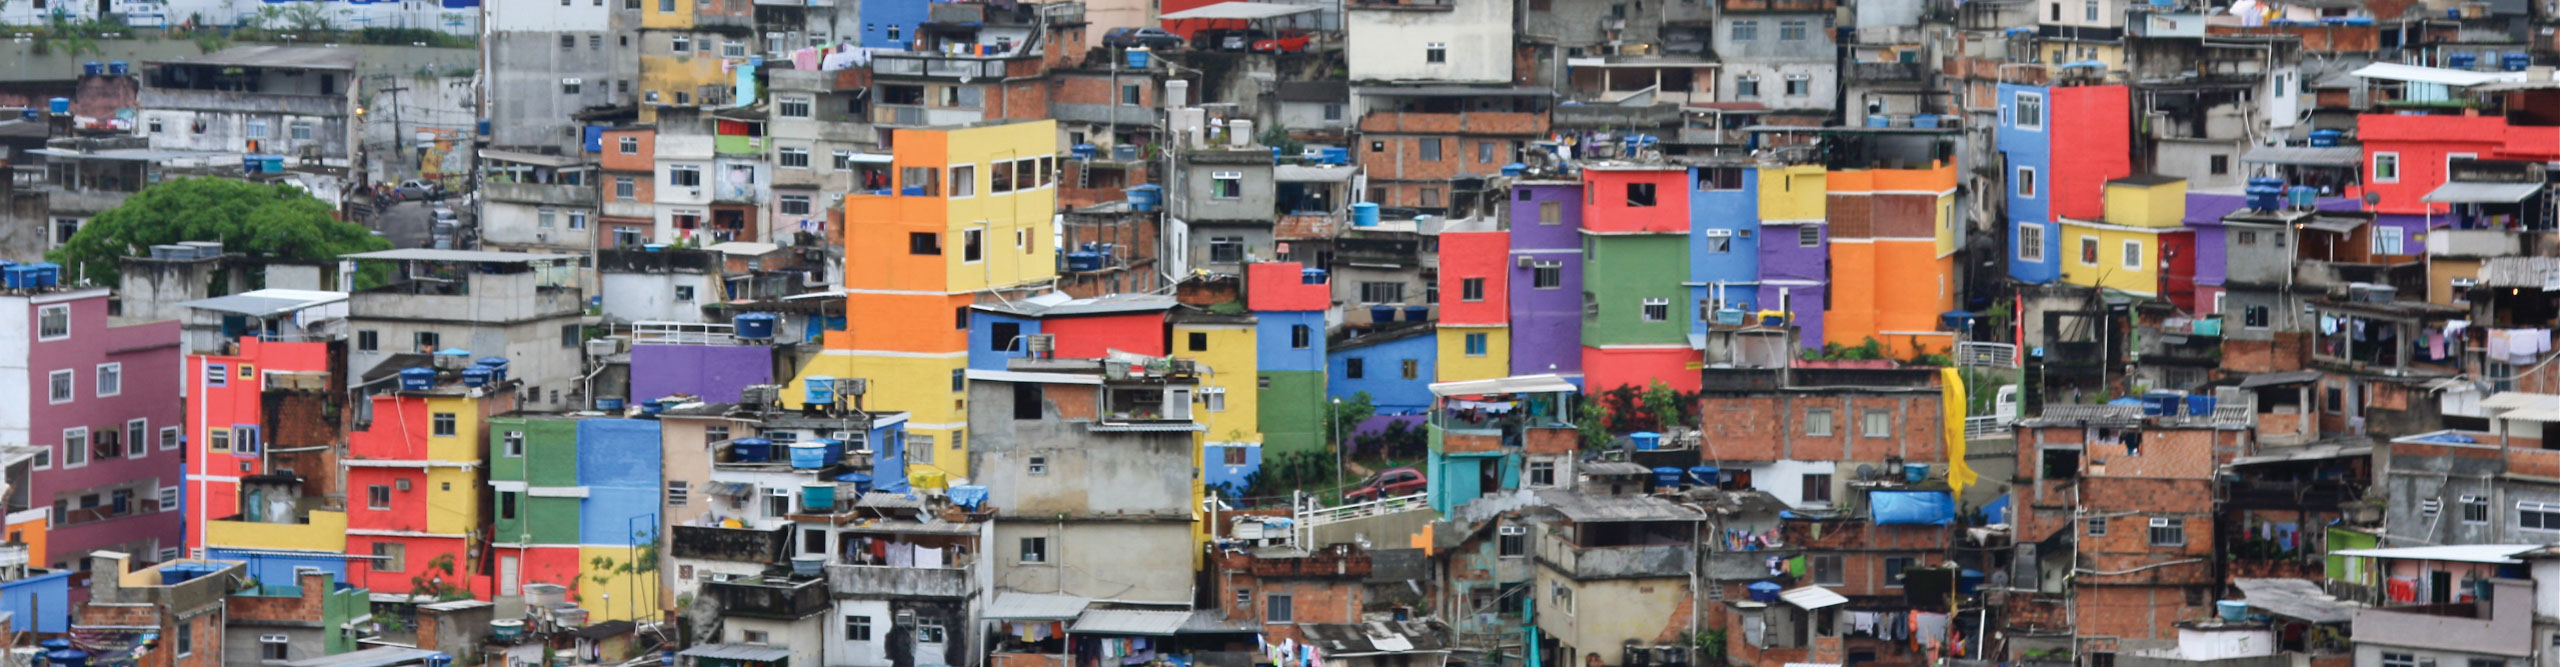 Rainbow colours favelas on the hillside in Rio, Brazil 